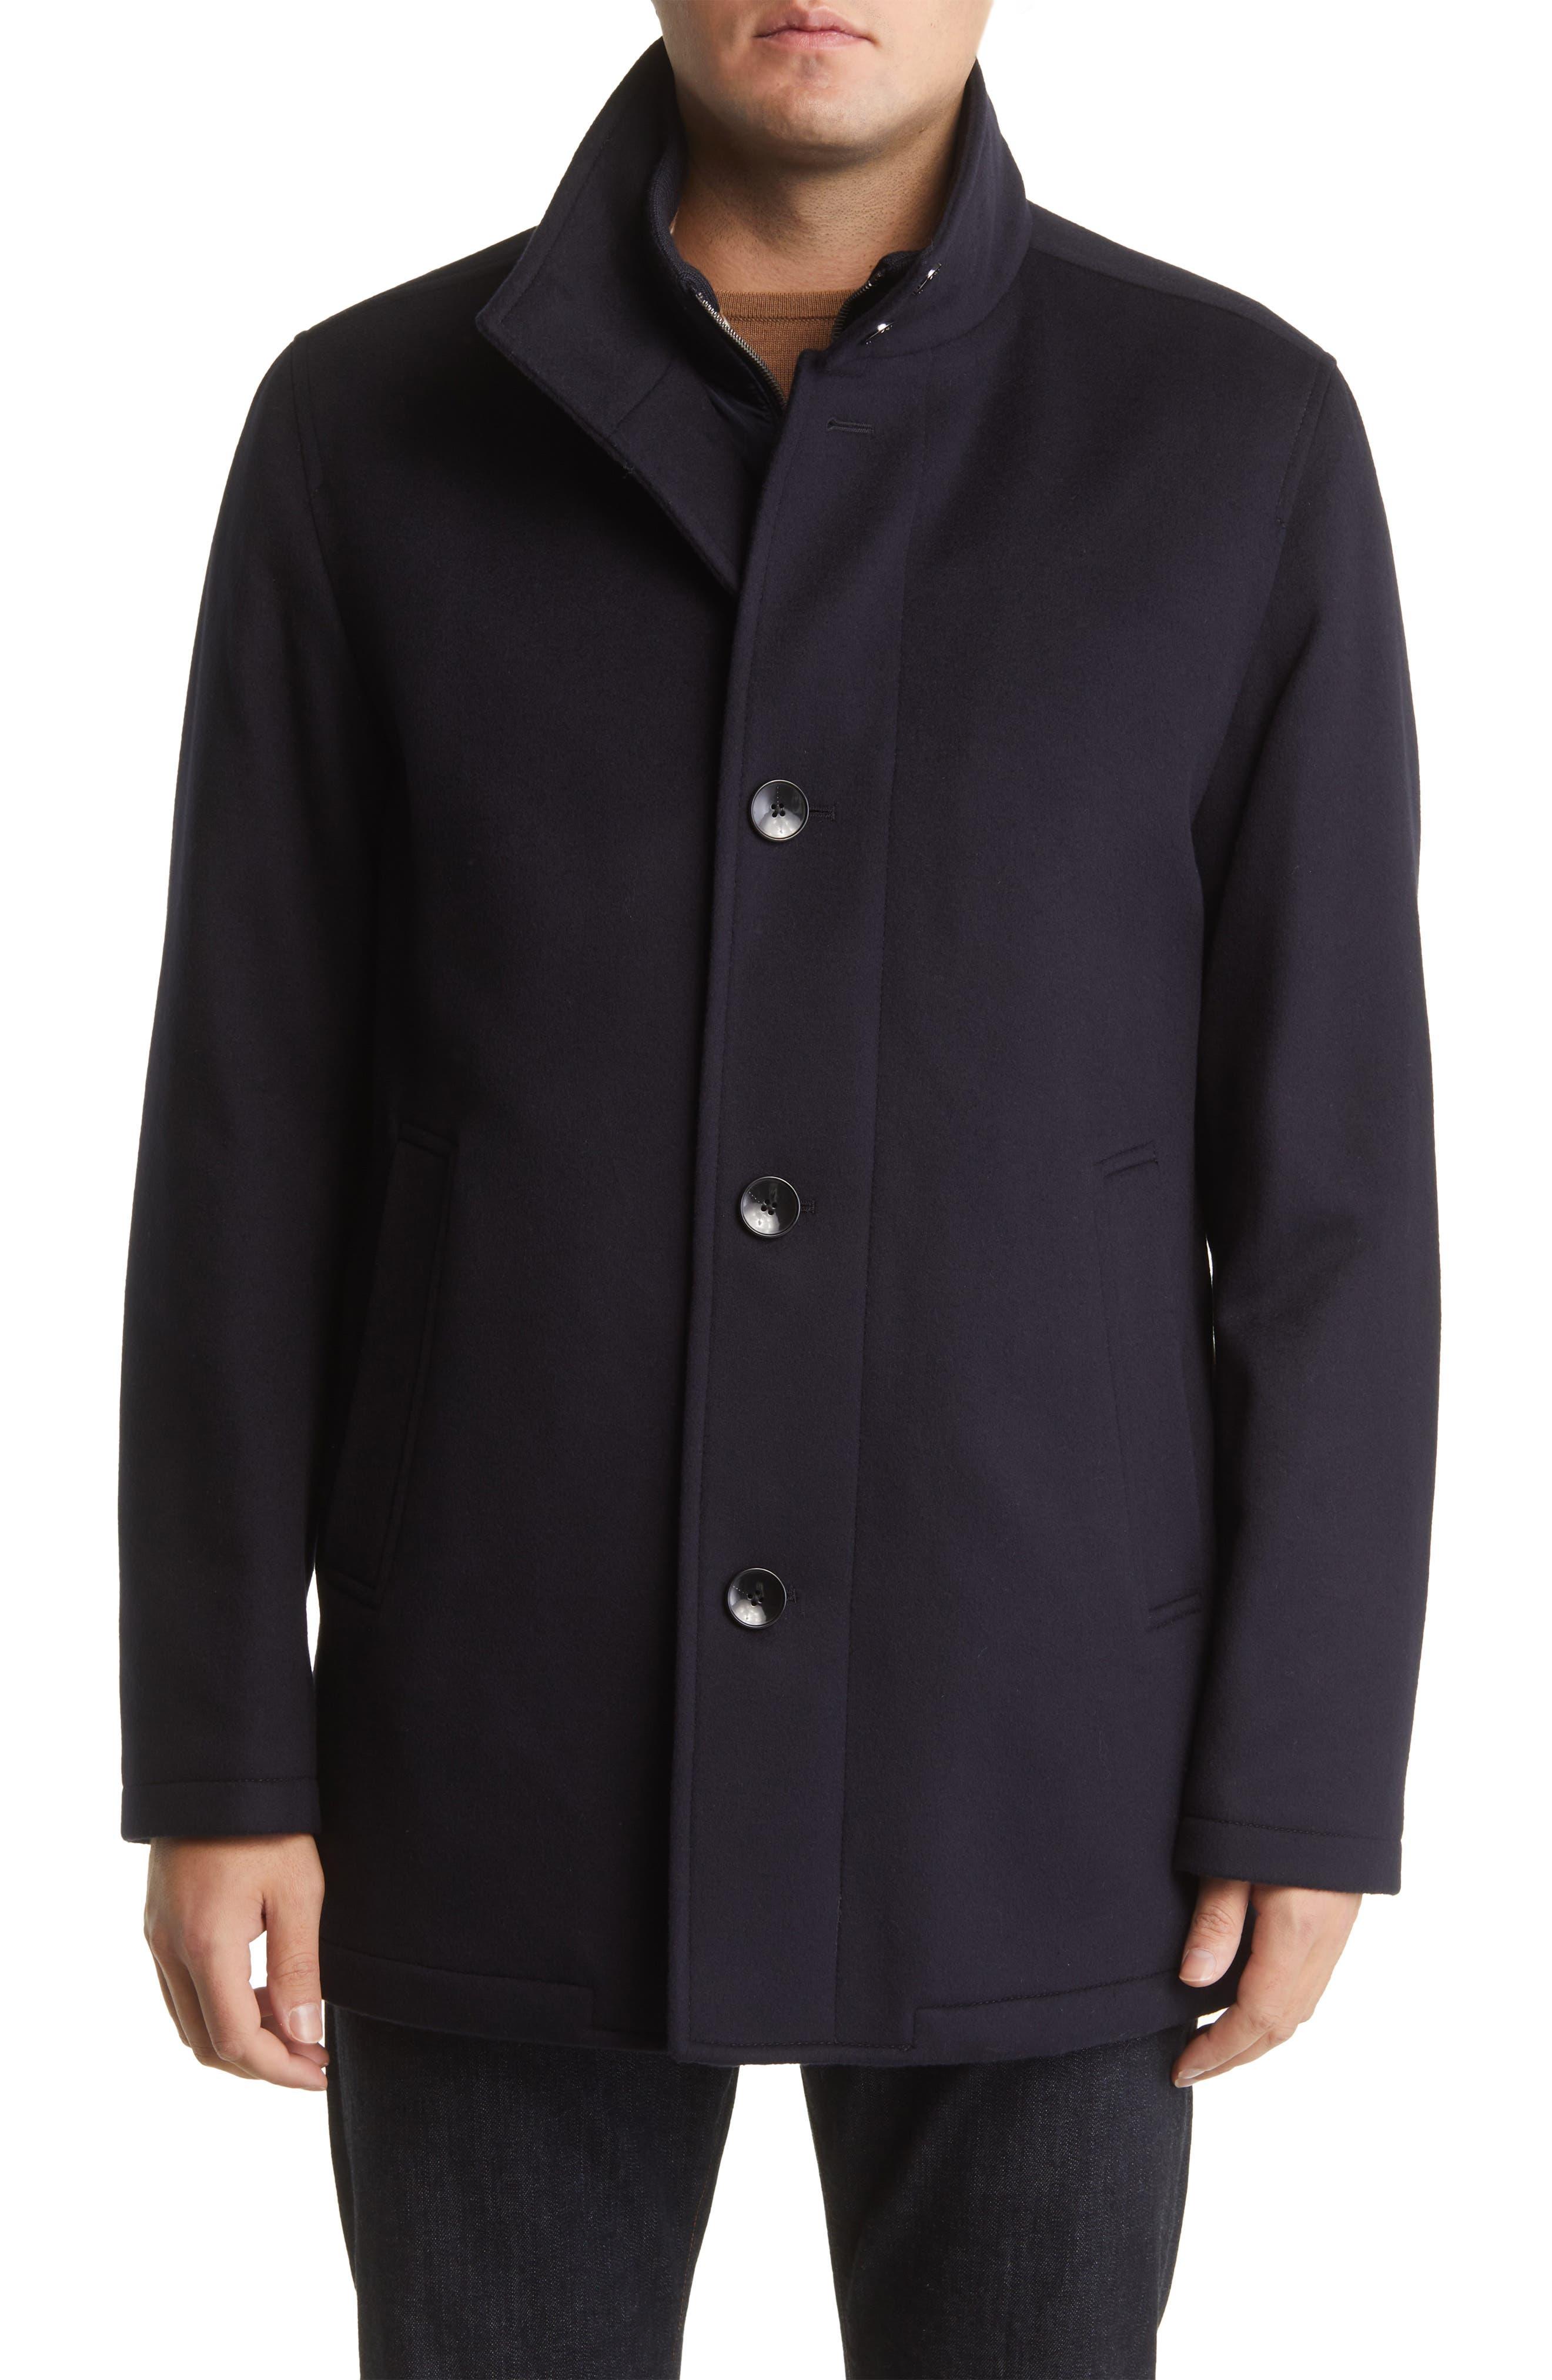 BOSS by HUGO BOSS Coxtan Virgin Wool & Cashmere Coat in Black for Men | Lyst